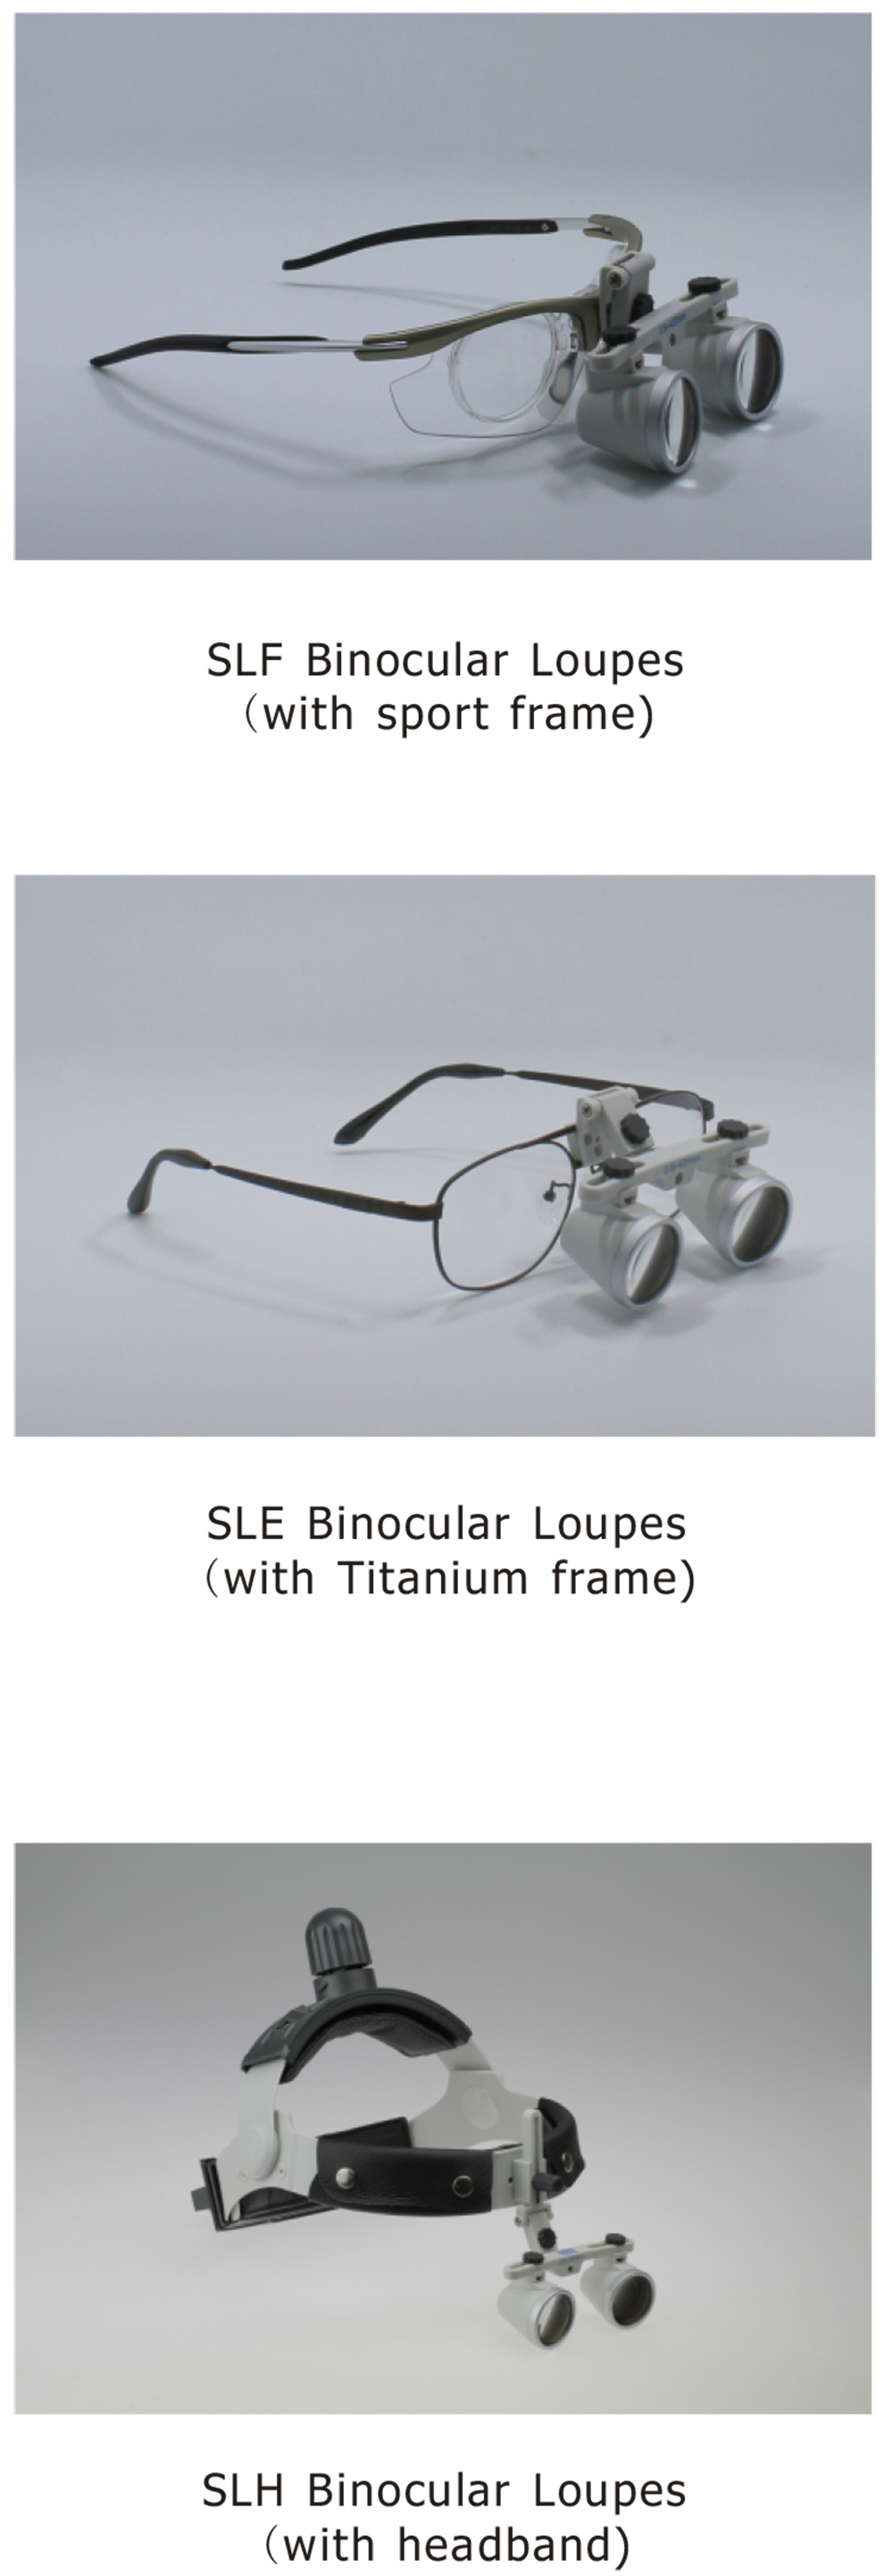 SLF/SLE/SLH Binocular Loupes